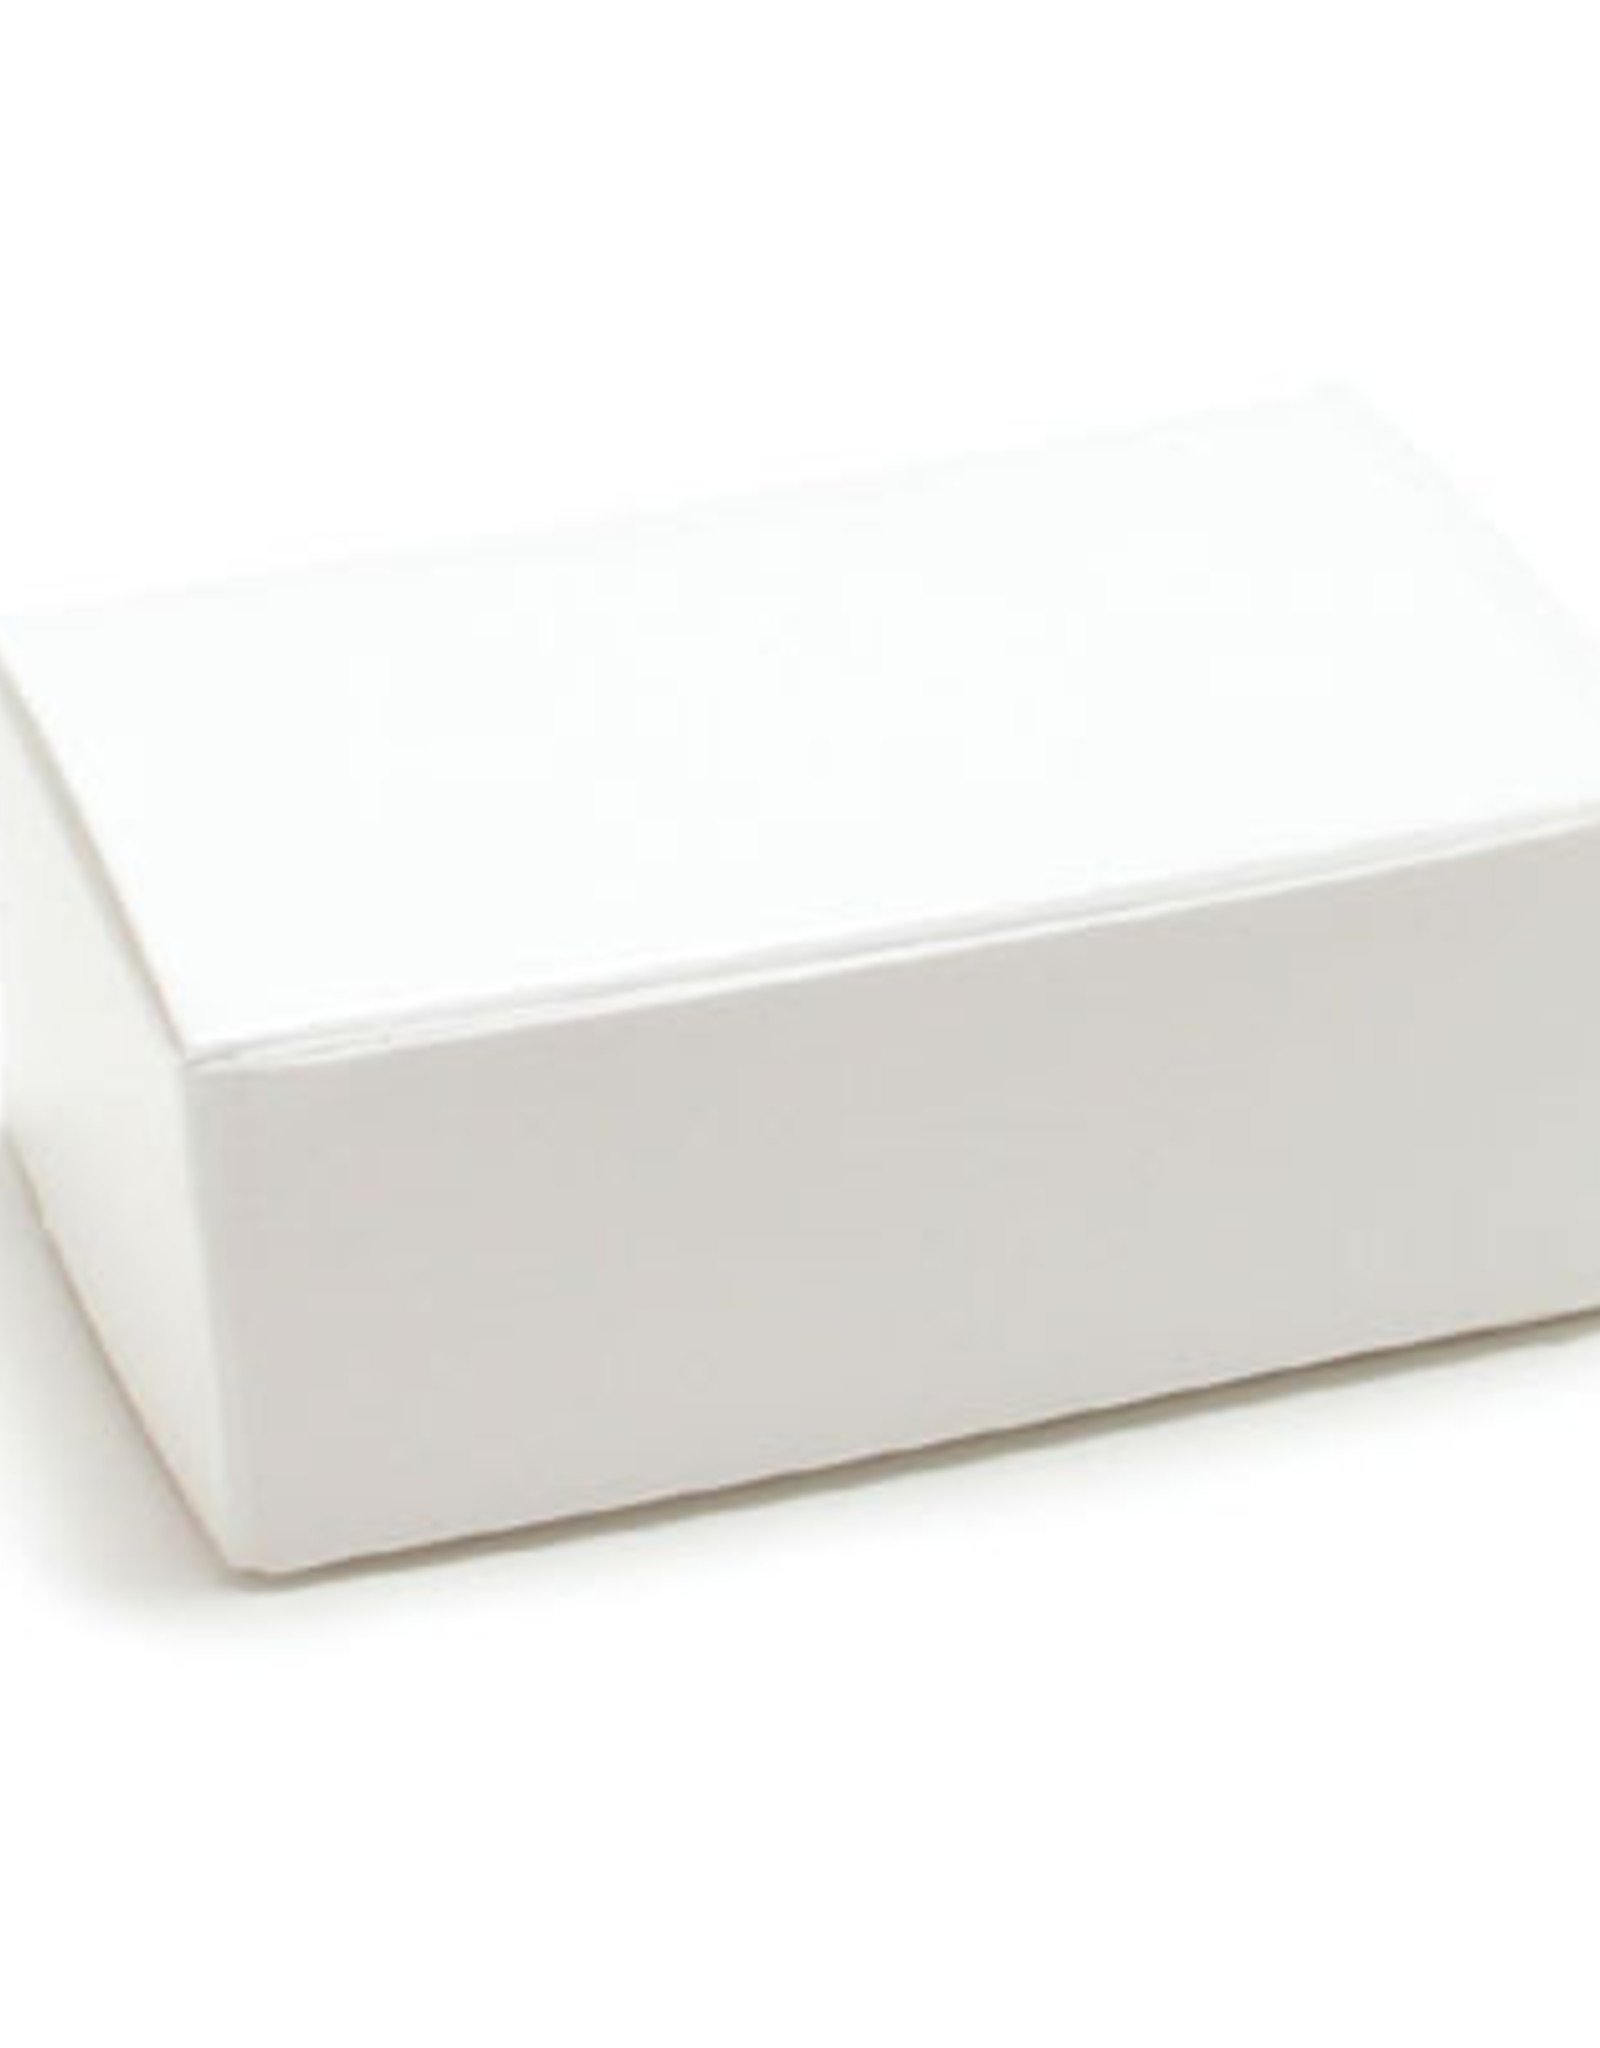 White Candy Box (2#)